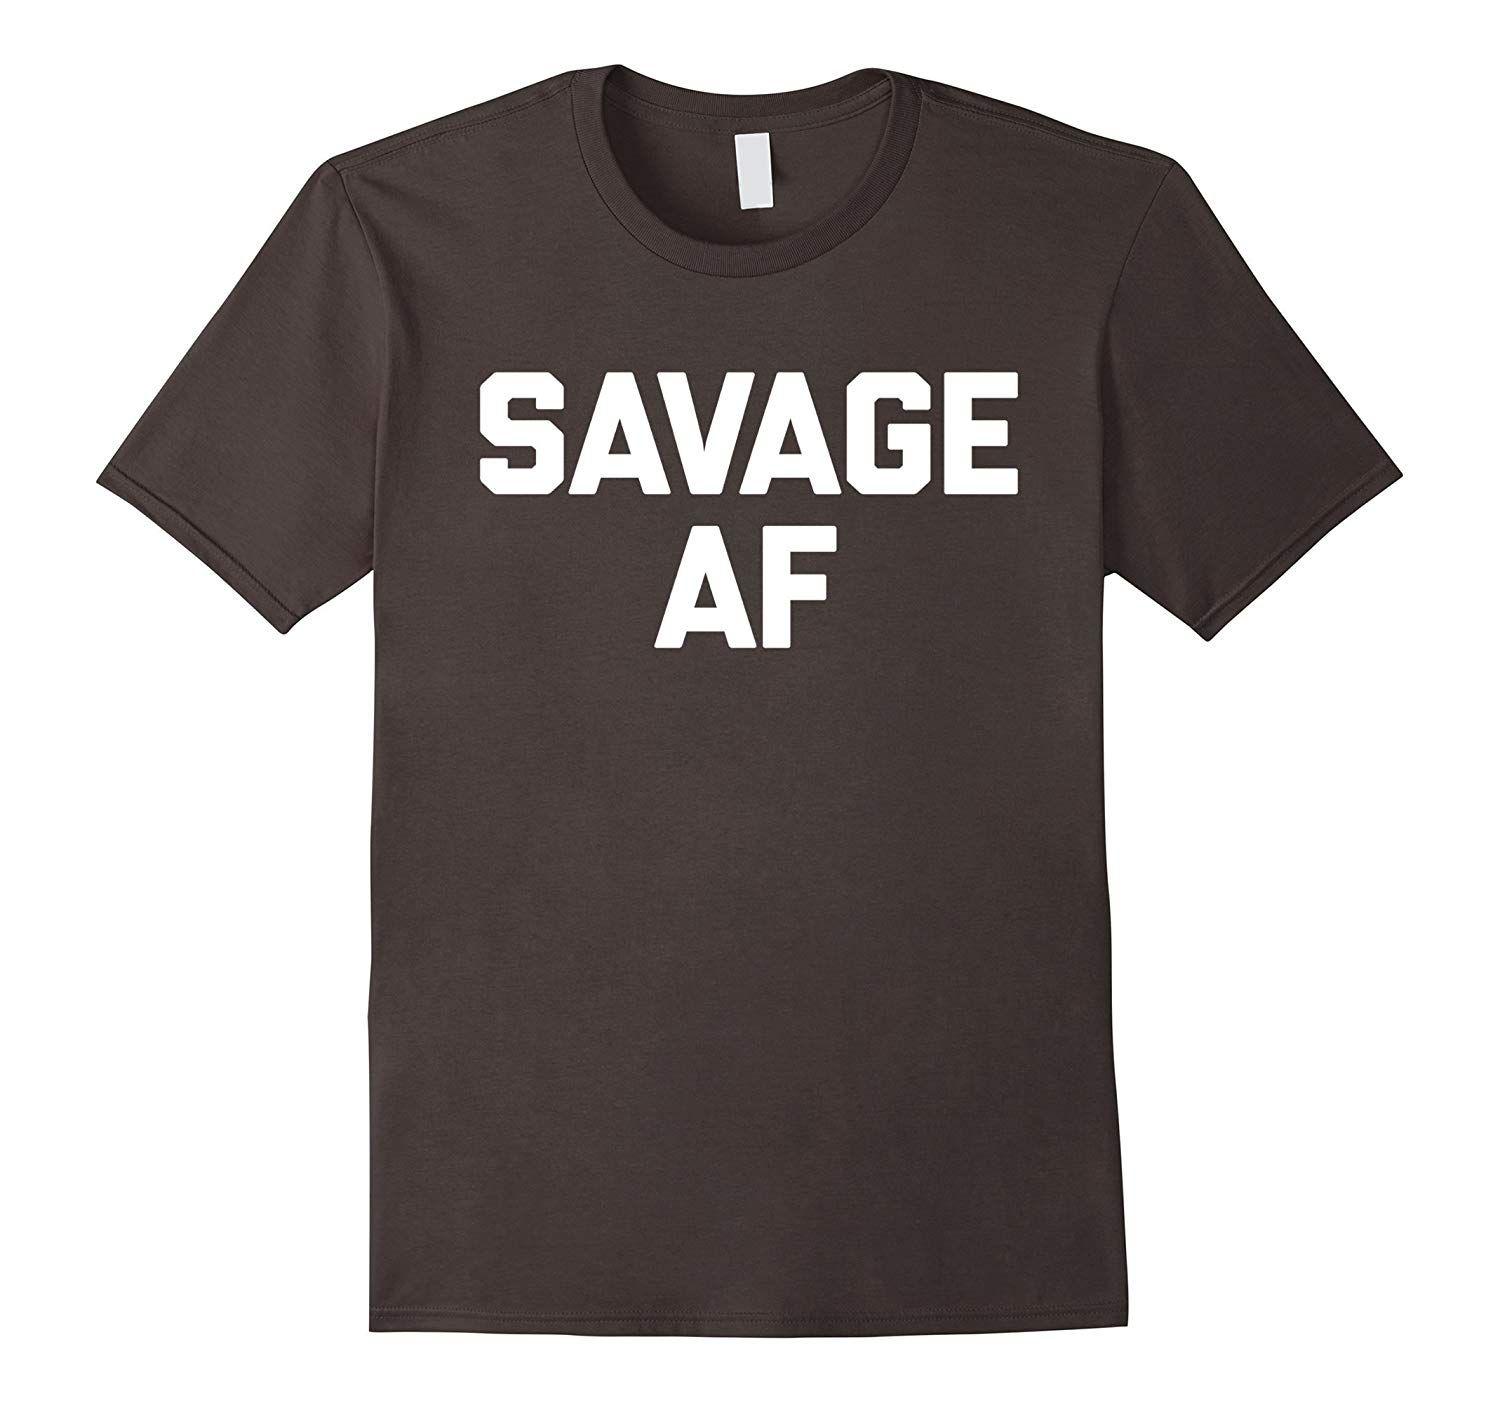 Cute Savage Logo - Savage AF T-Shirt funny saying sarcastic novelty humor cute-BN ...